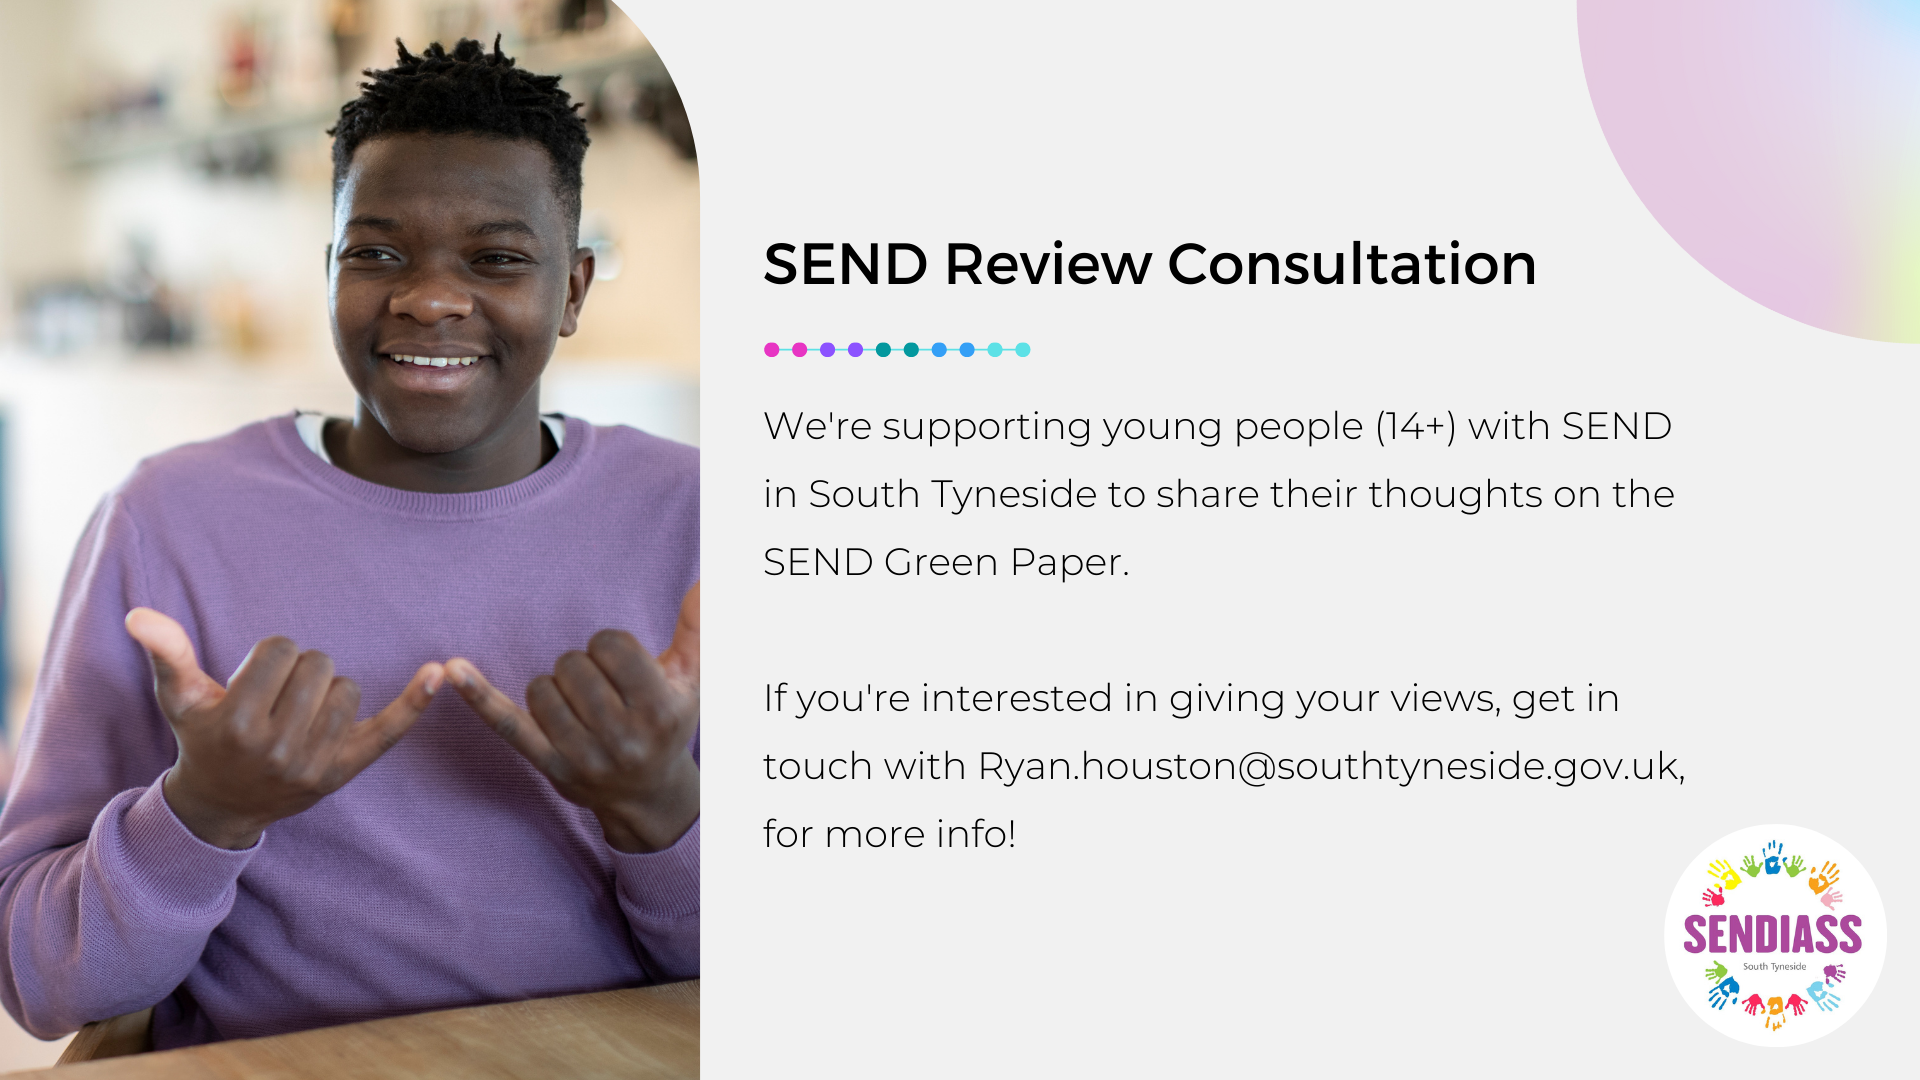 SEND Review Consultation - Social Media Post